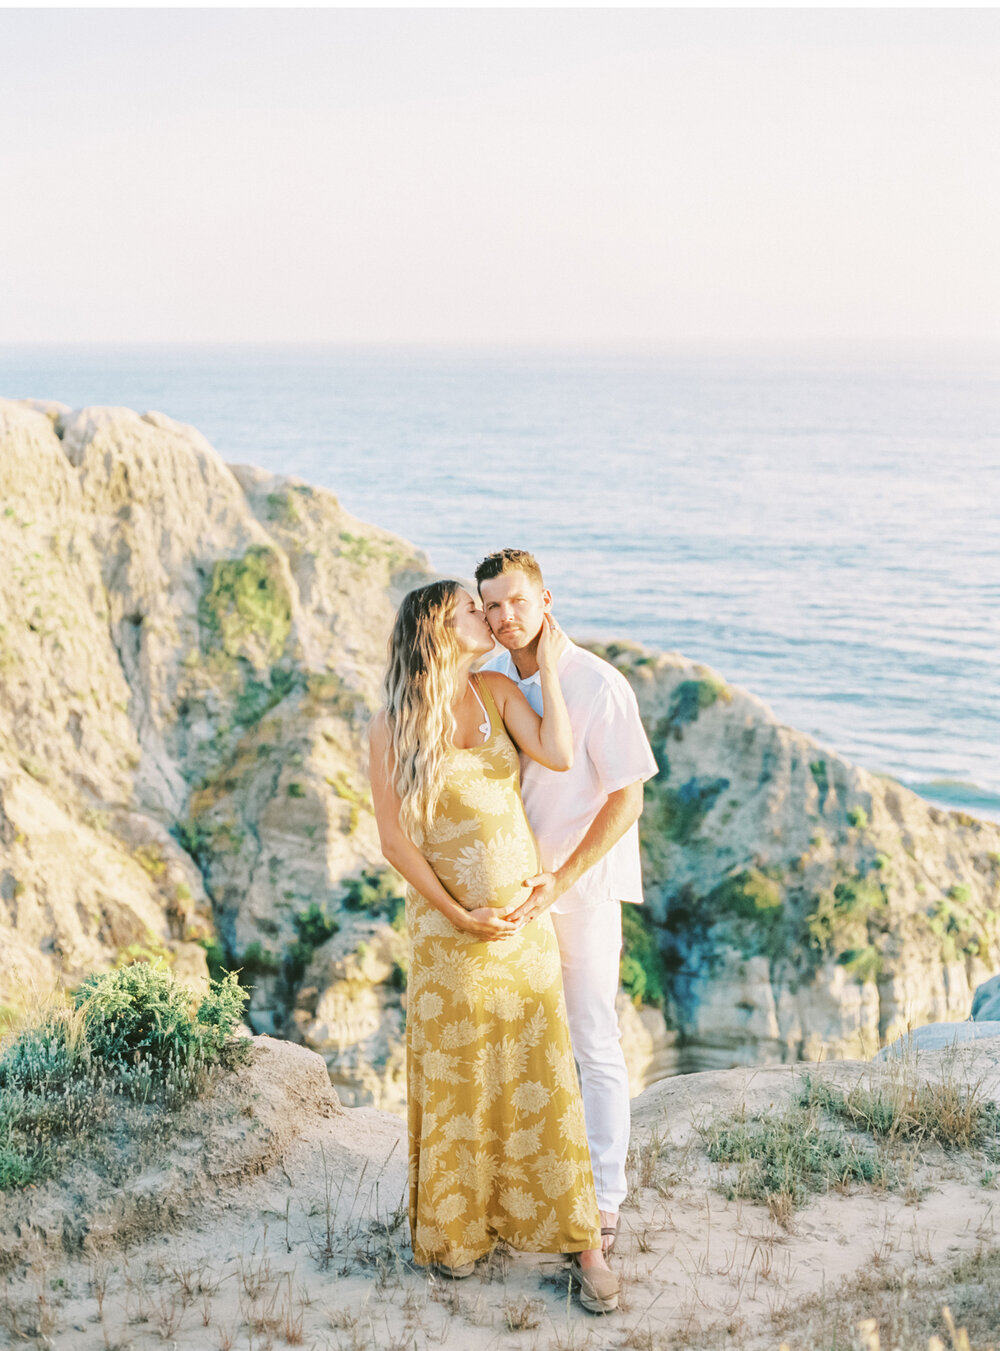 Beach-photography-maternity-photo-shoot-wedding-model-southern-california-photo-shoot-Natalie-Schutt-Photography_08.jpg